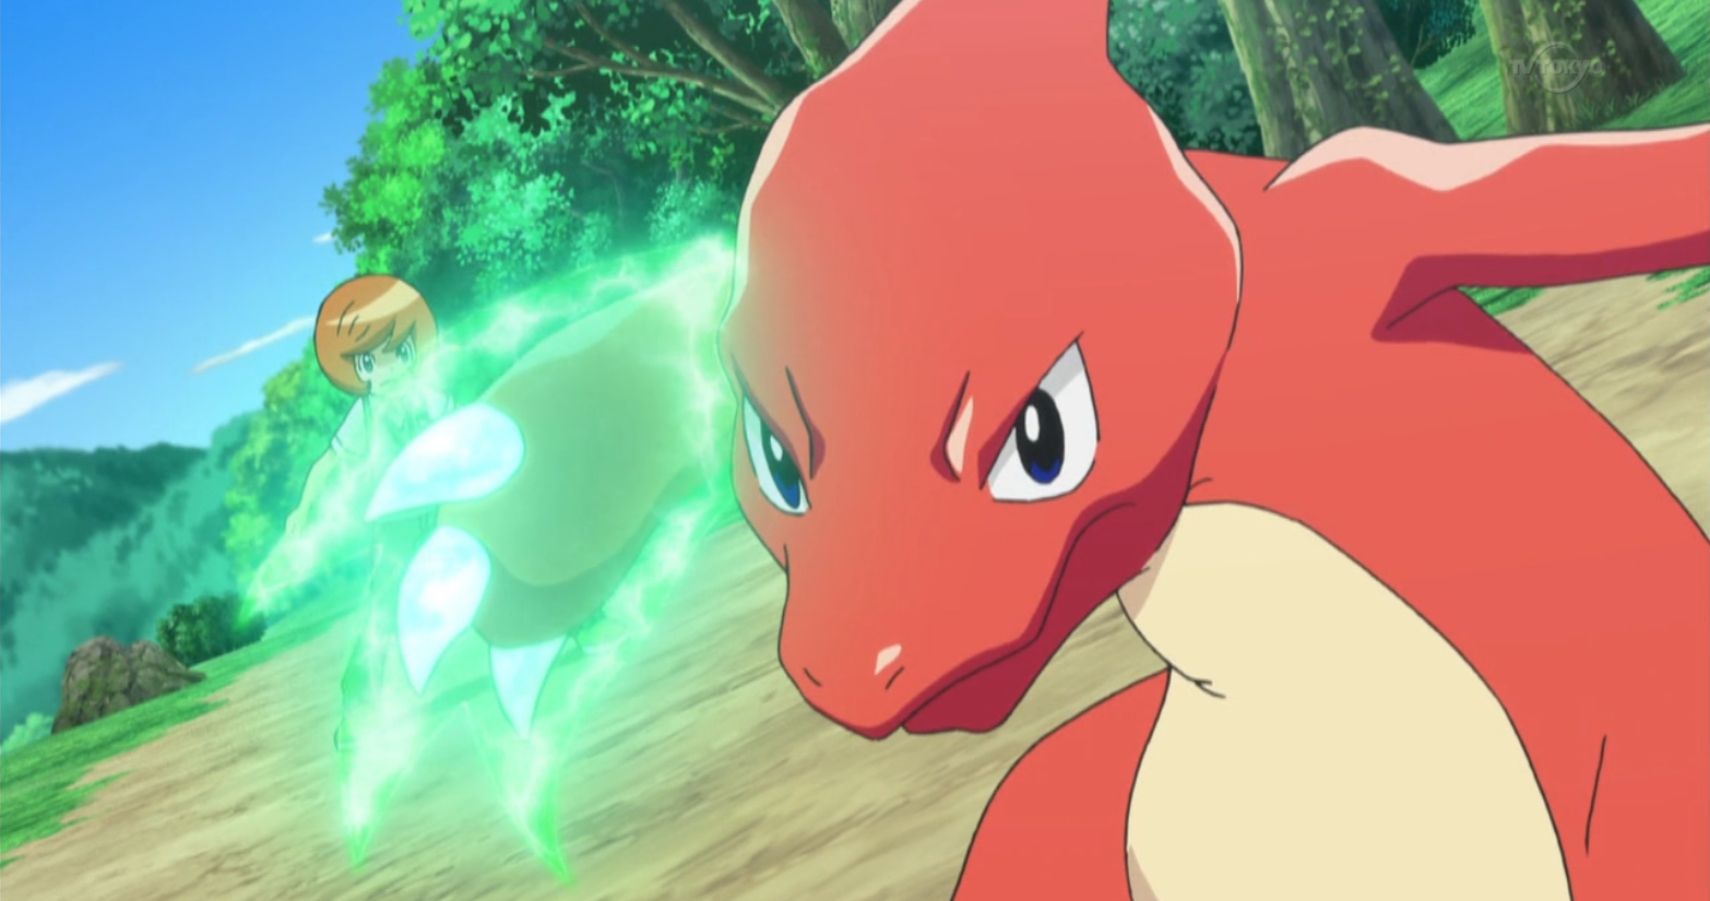 Charmeleon using Dragon Claw in the Pokemon anime